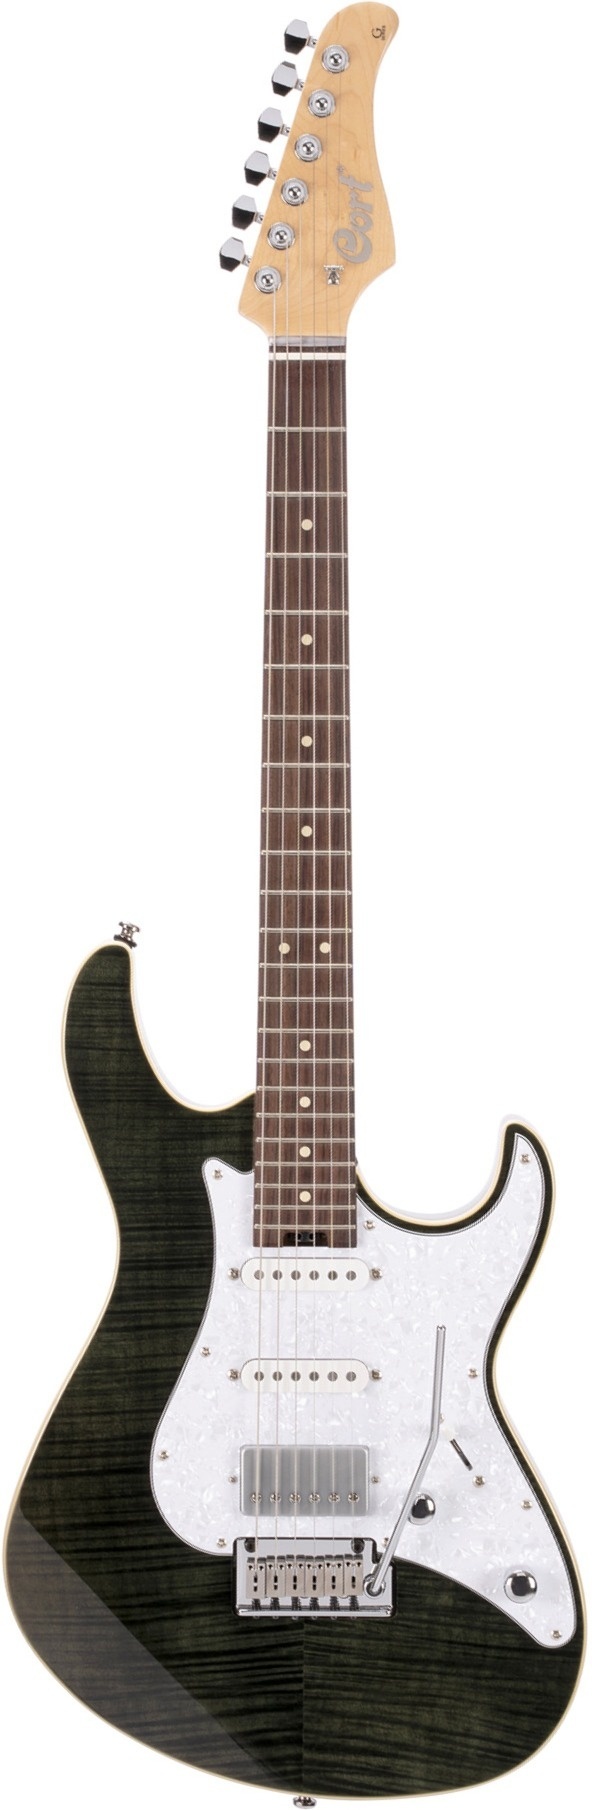 Cort G280 Select Electric Guitar (Black)